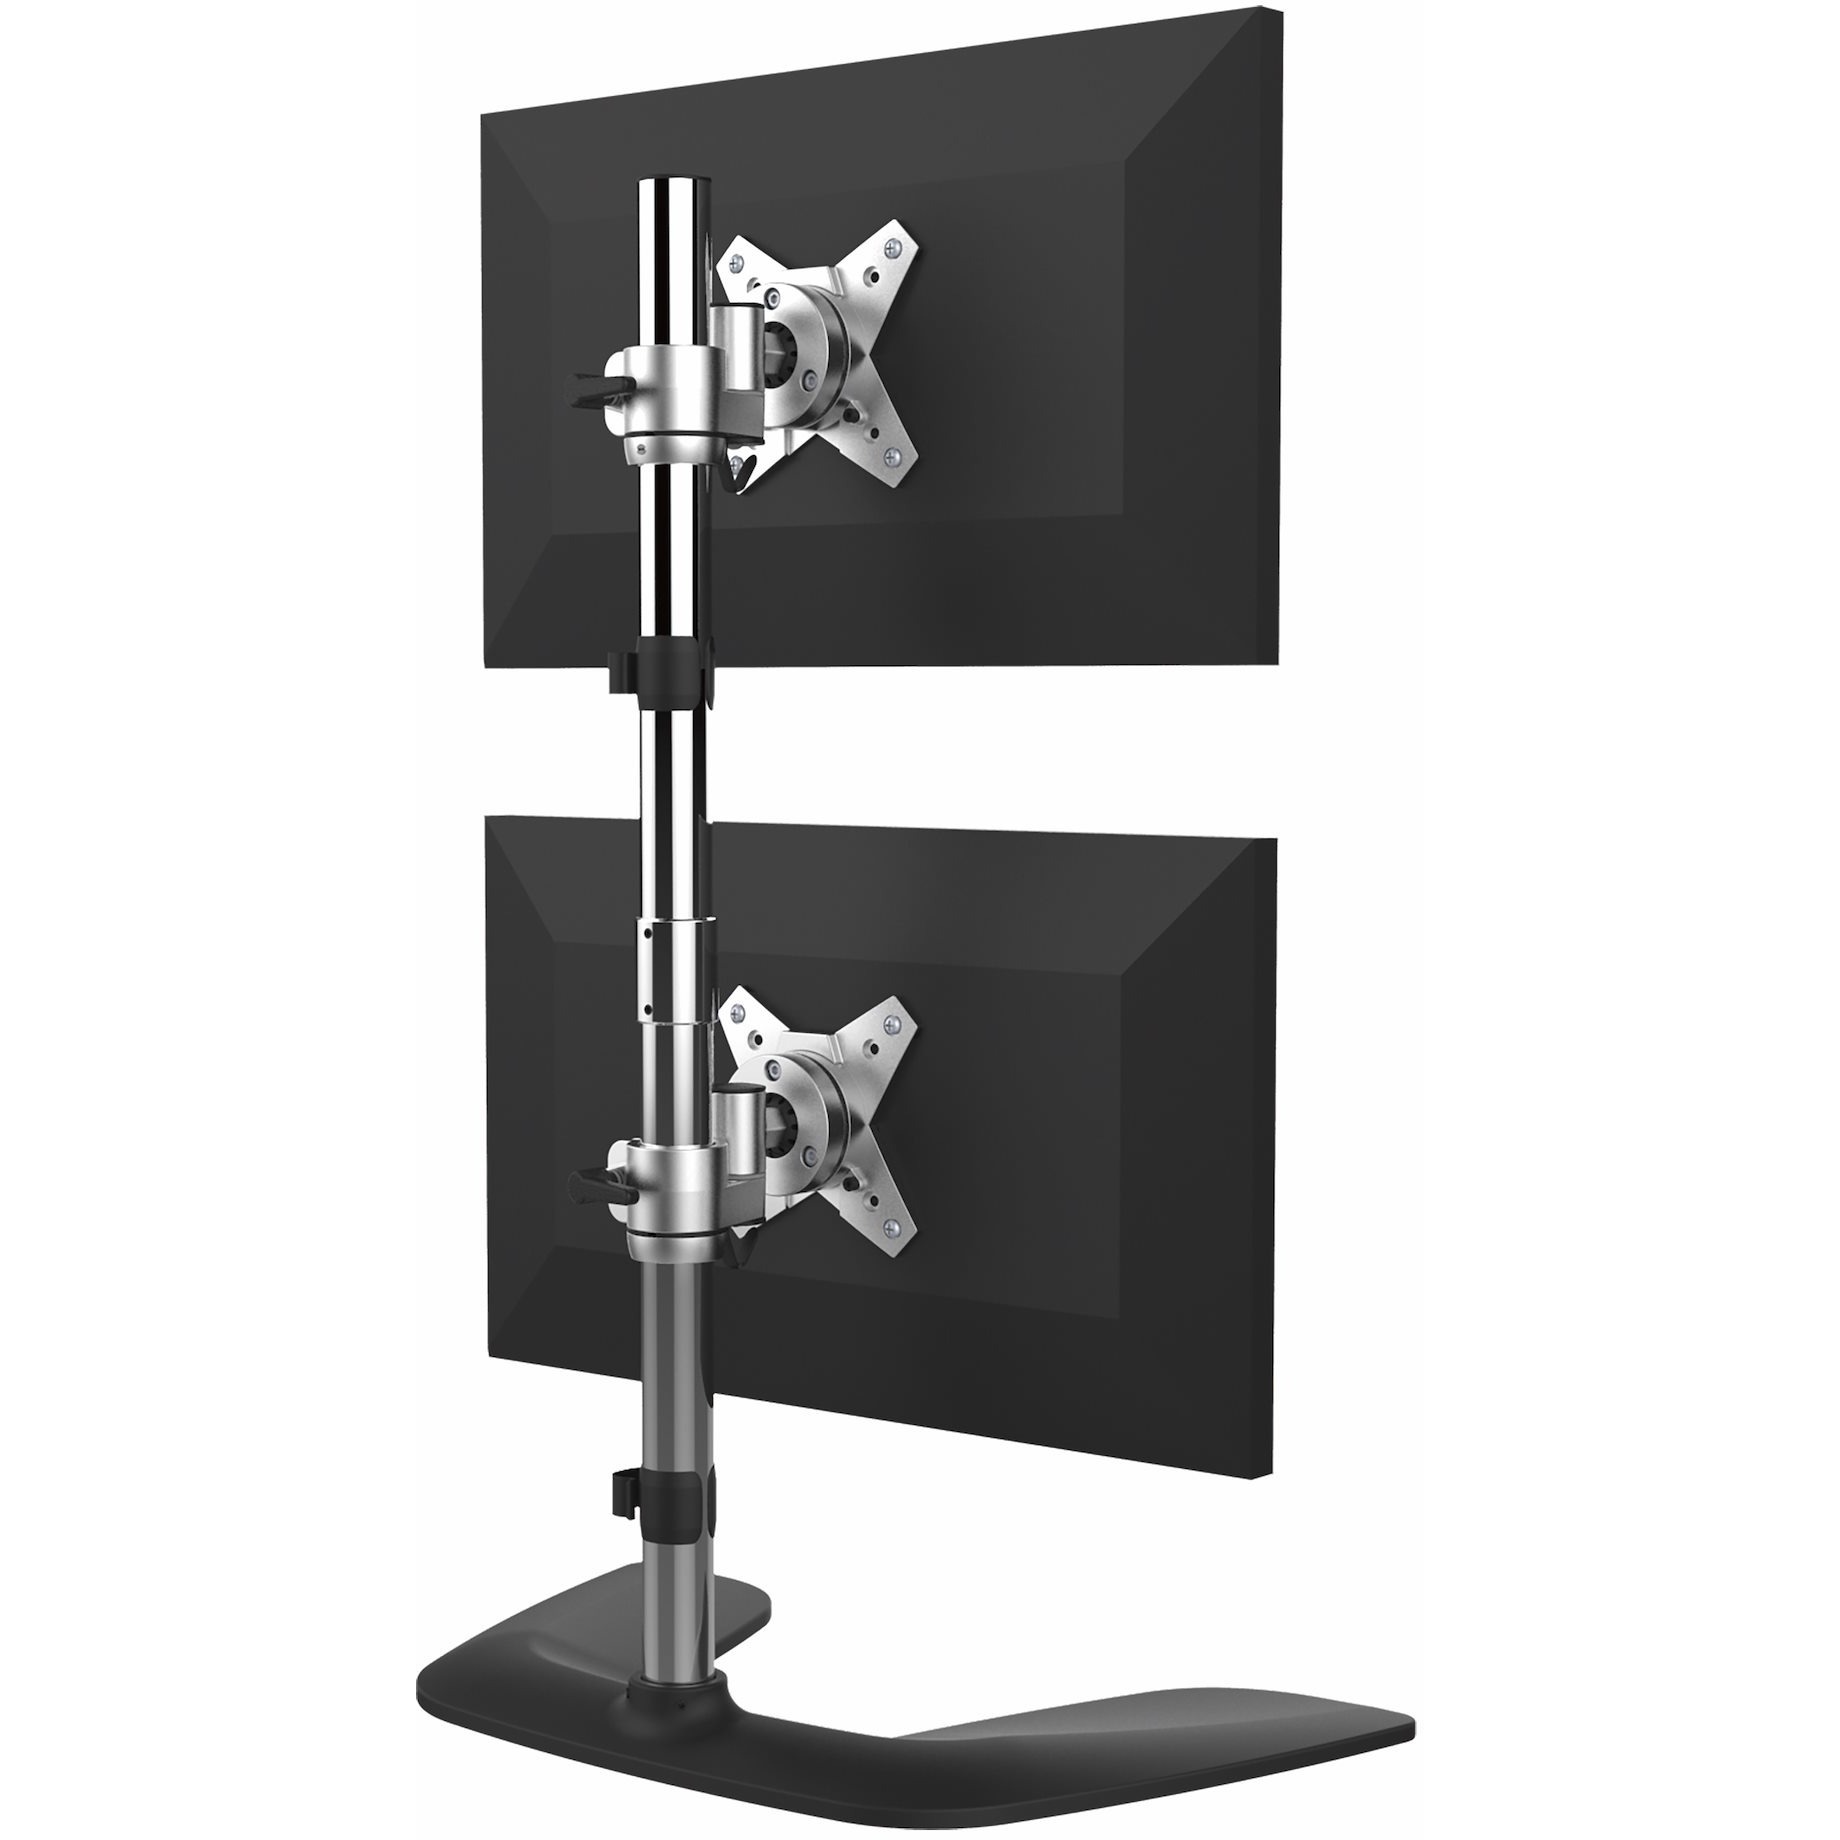 Vesa mount monitor stand